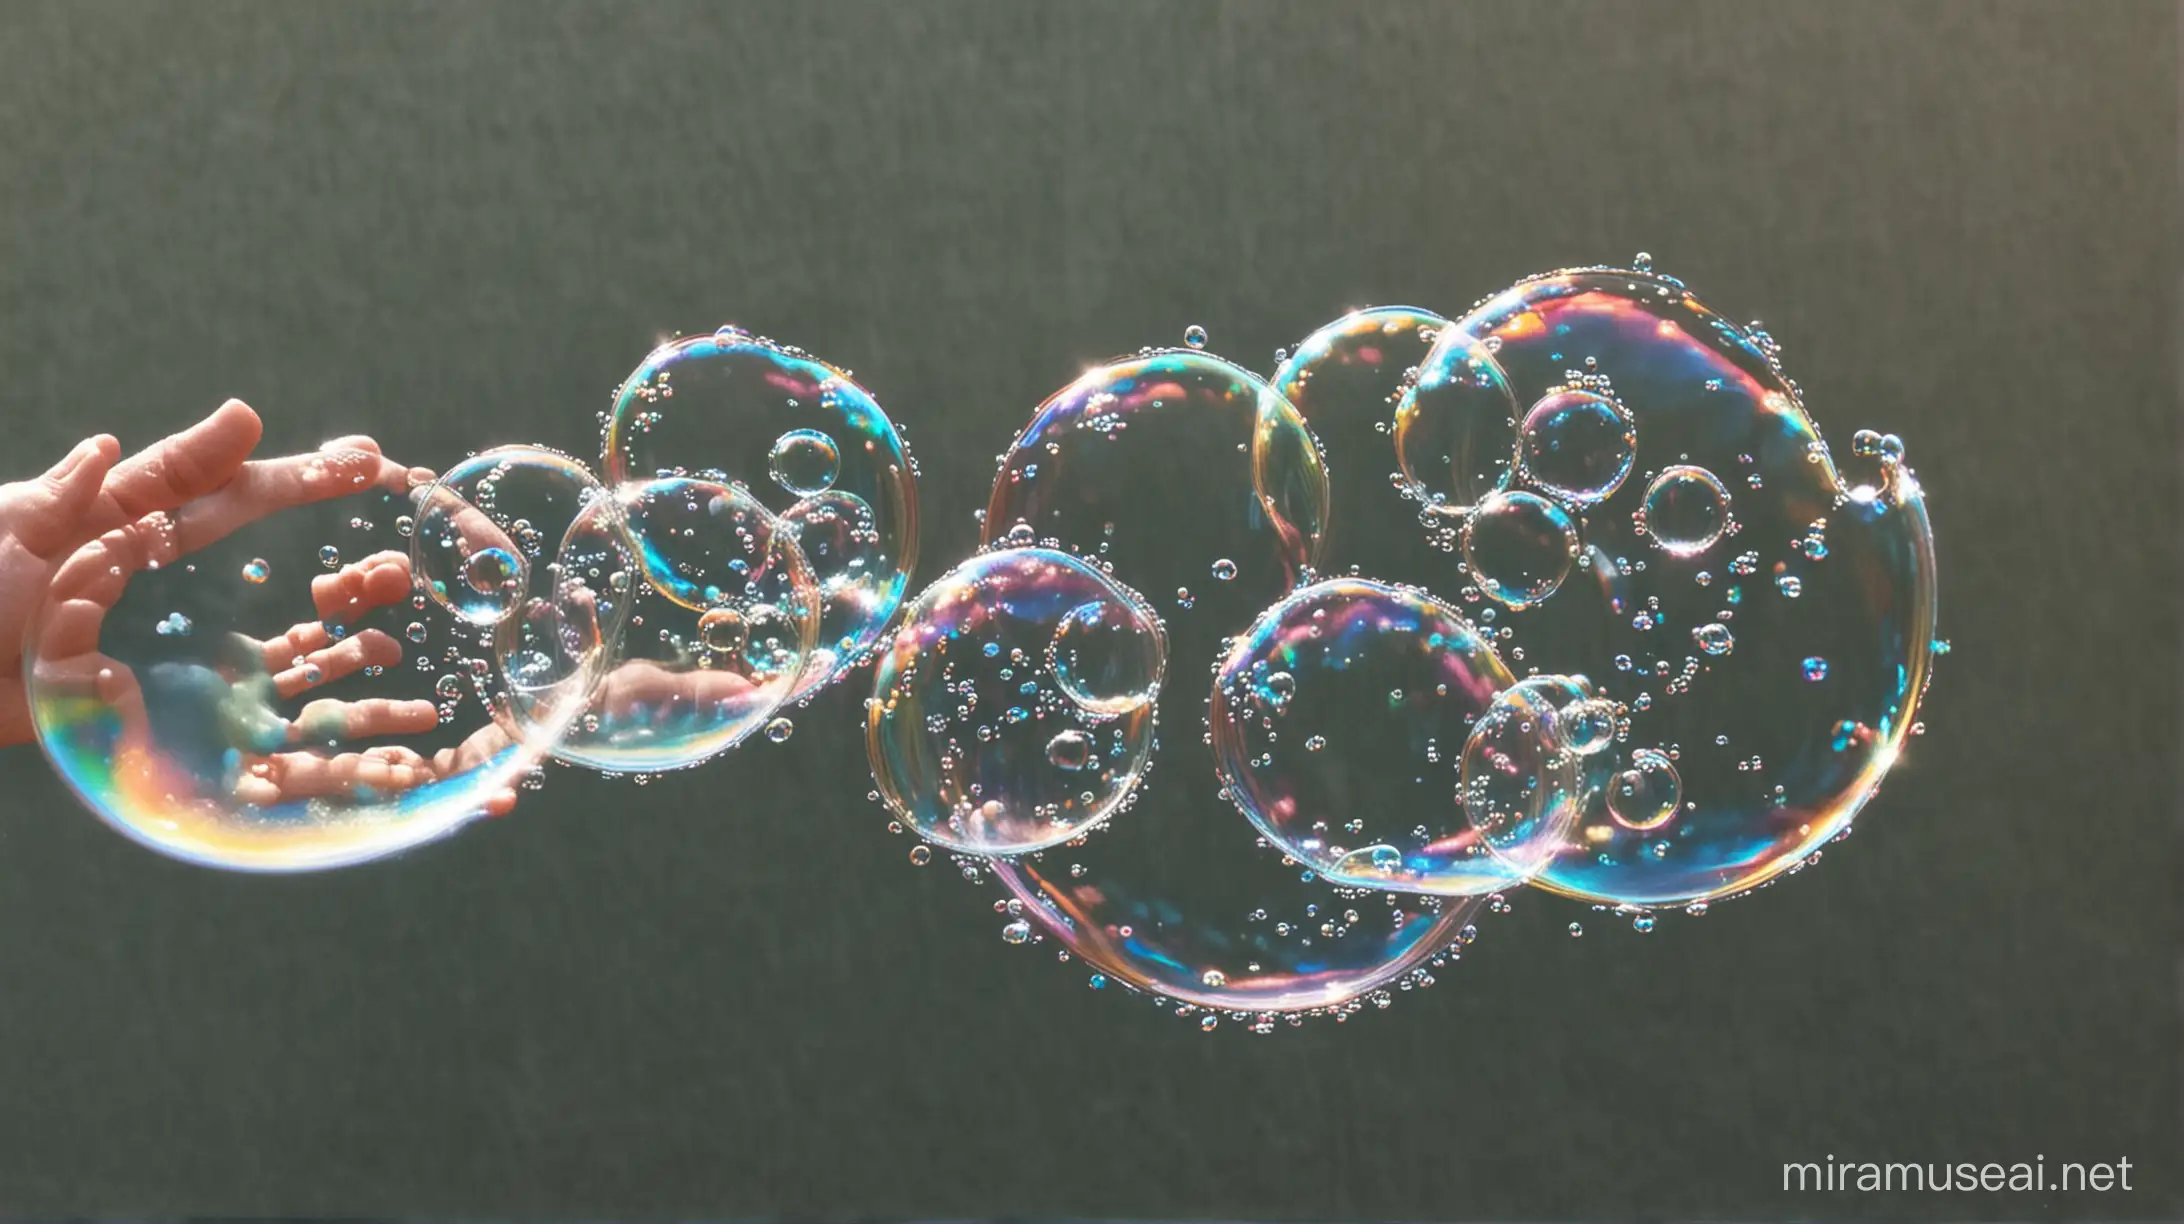 Soap bubbles bursting